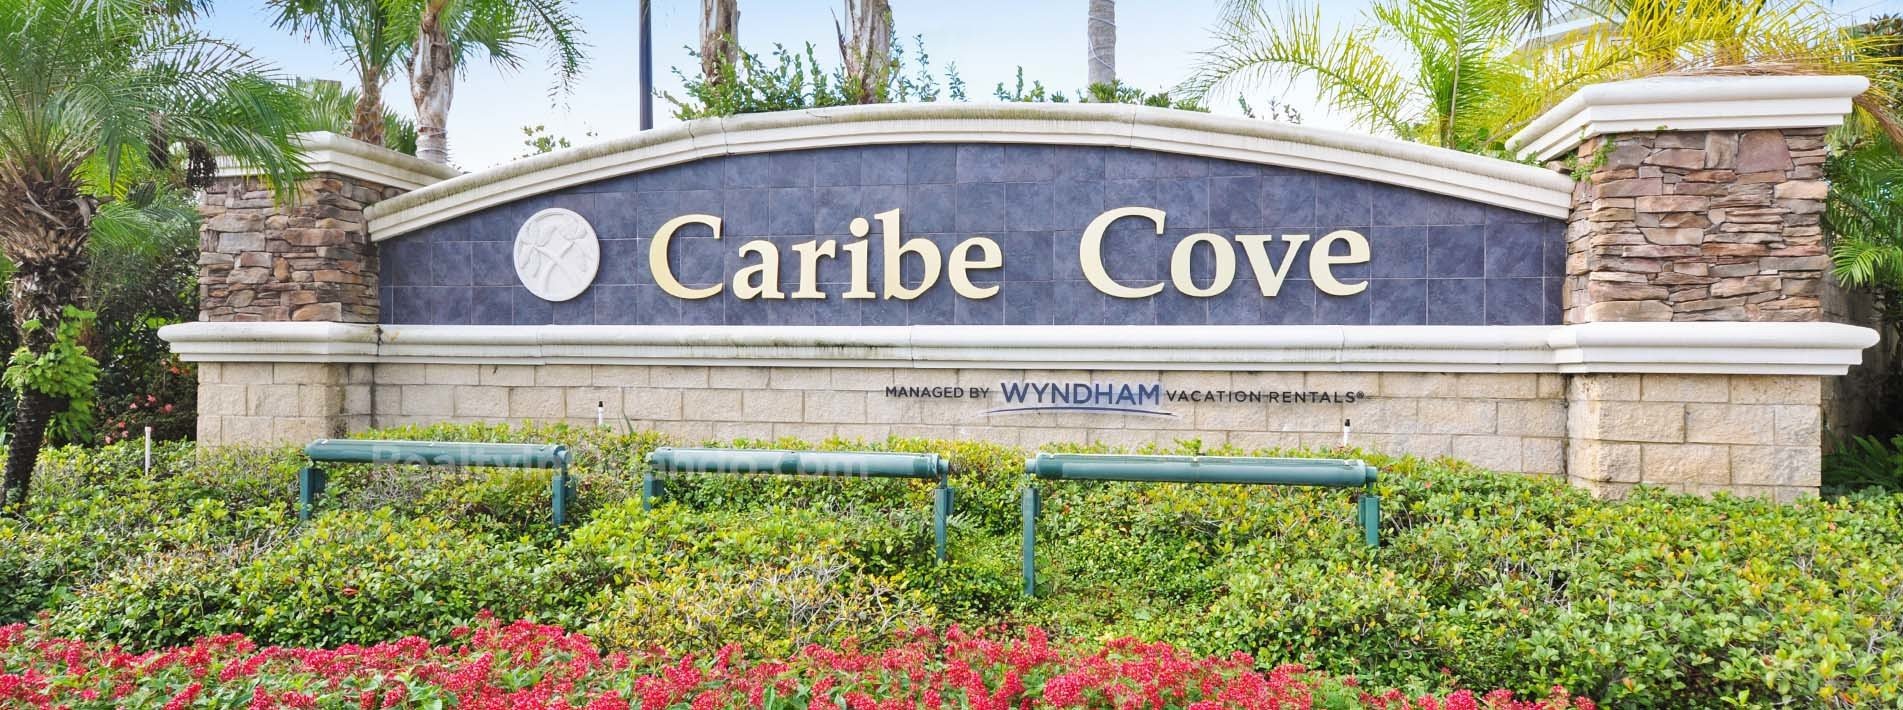 Caribe Cove Real Estate